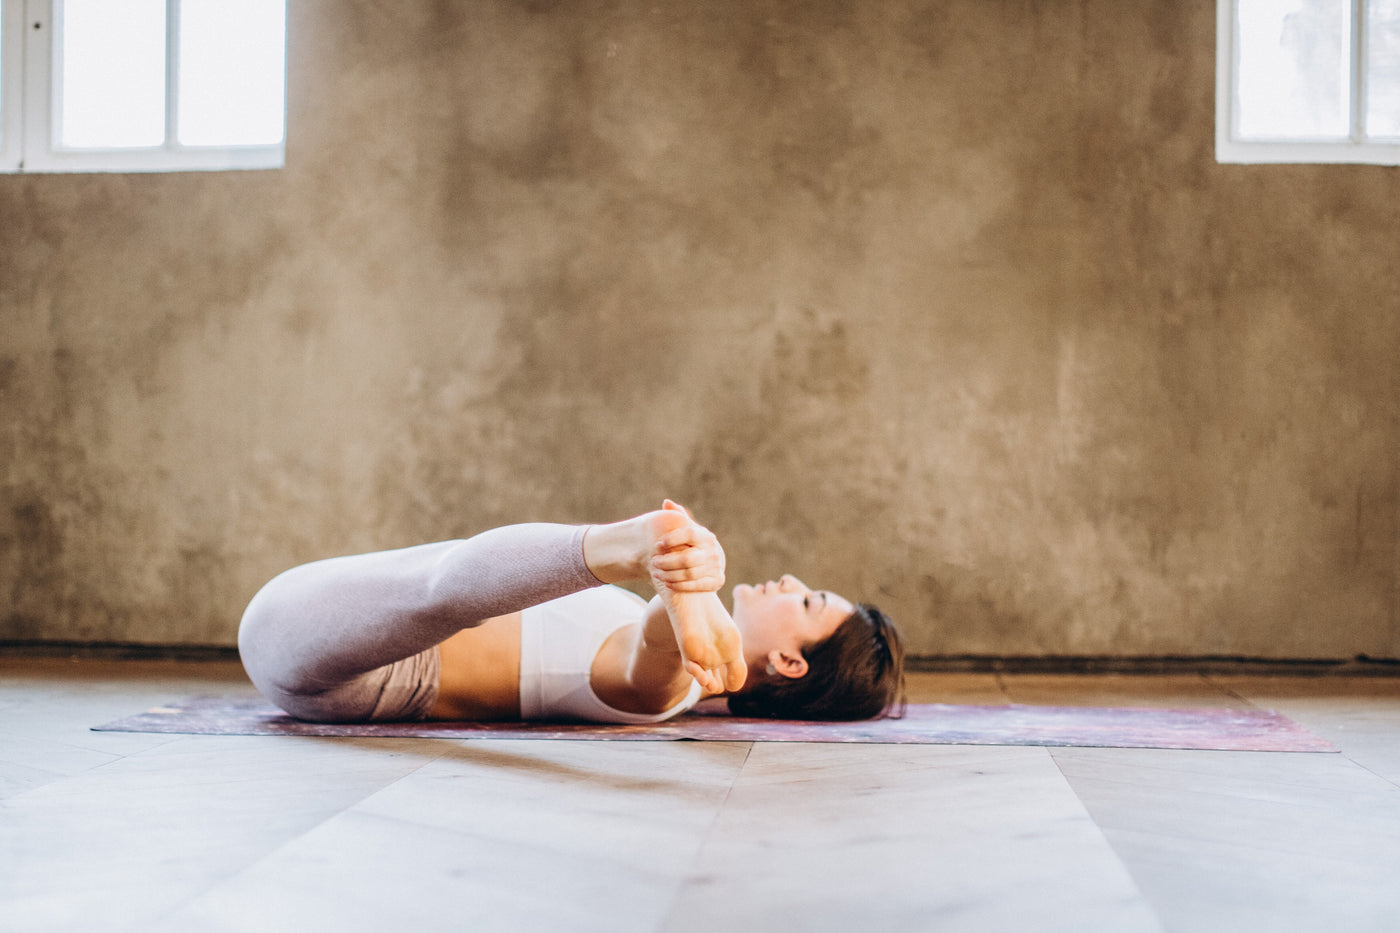 Keys to Safe Hip Opening: 3 Yoga Poses For Happy Hips - YogaUOnline